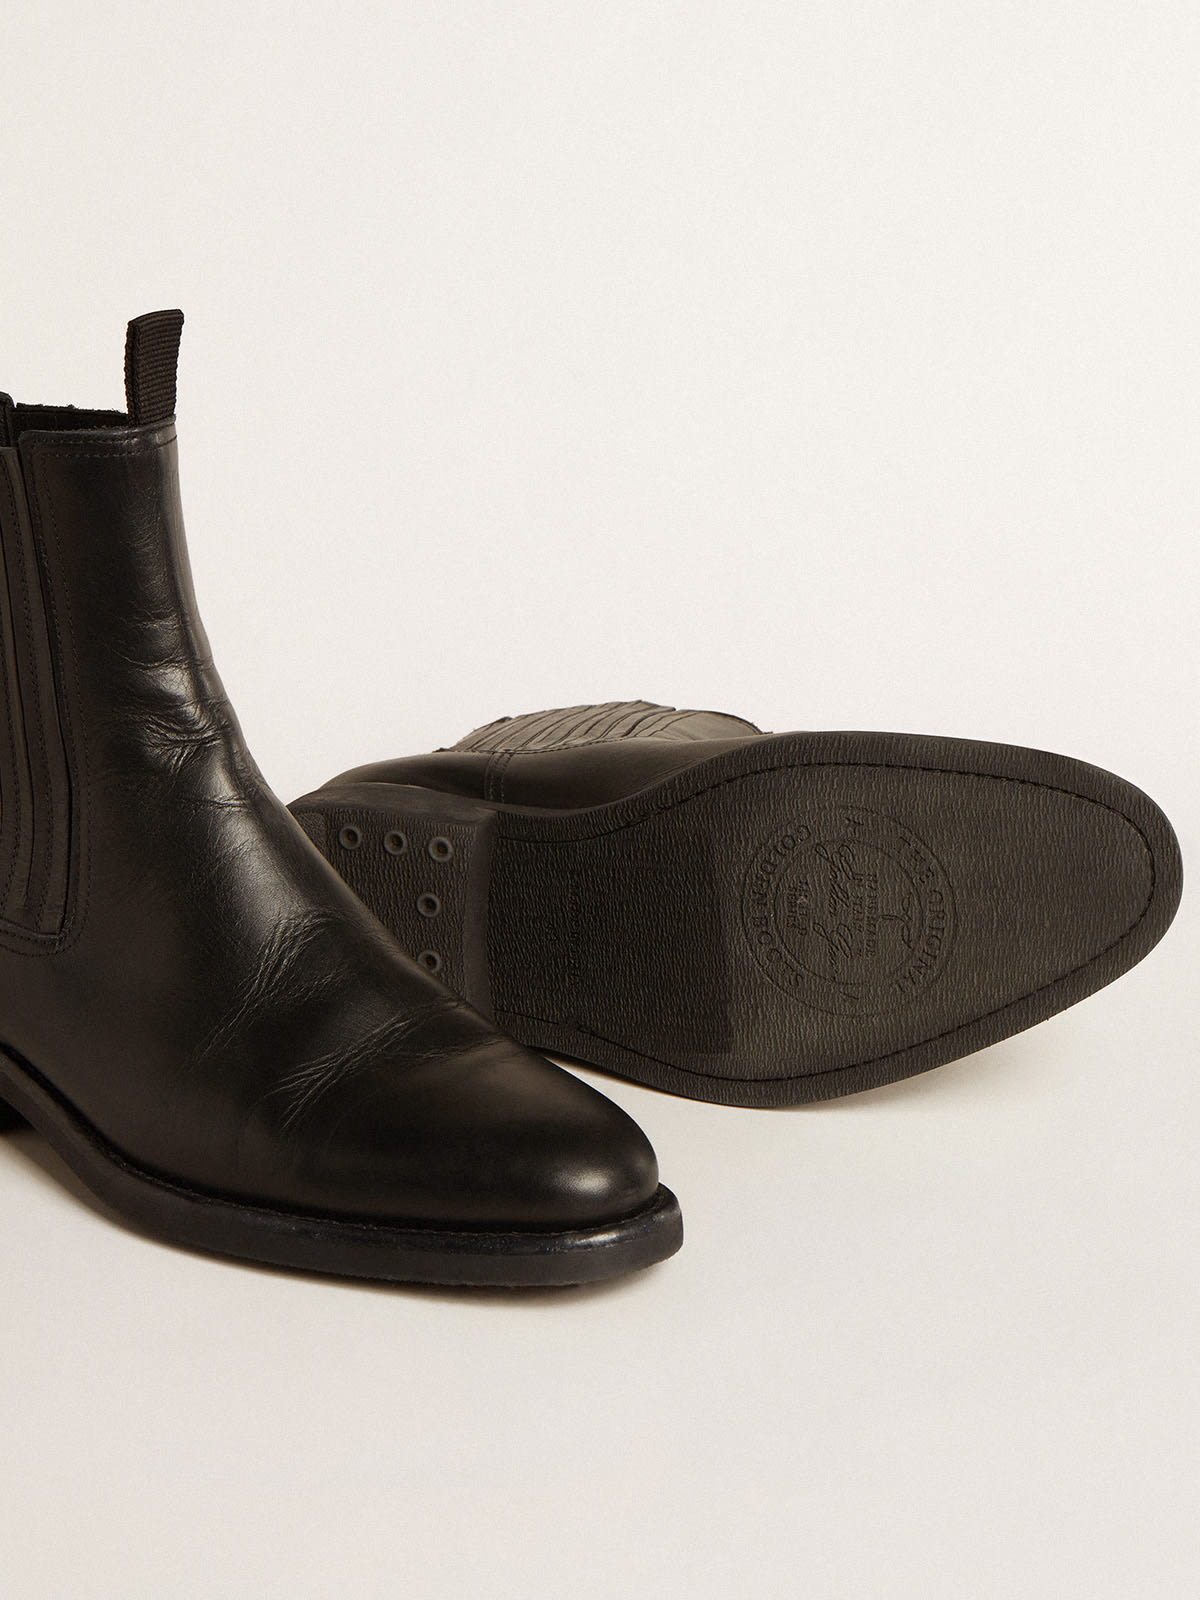 Golden Goose - Men’s Chelsea boots in black leather in 